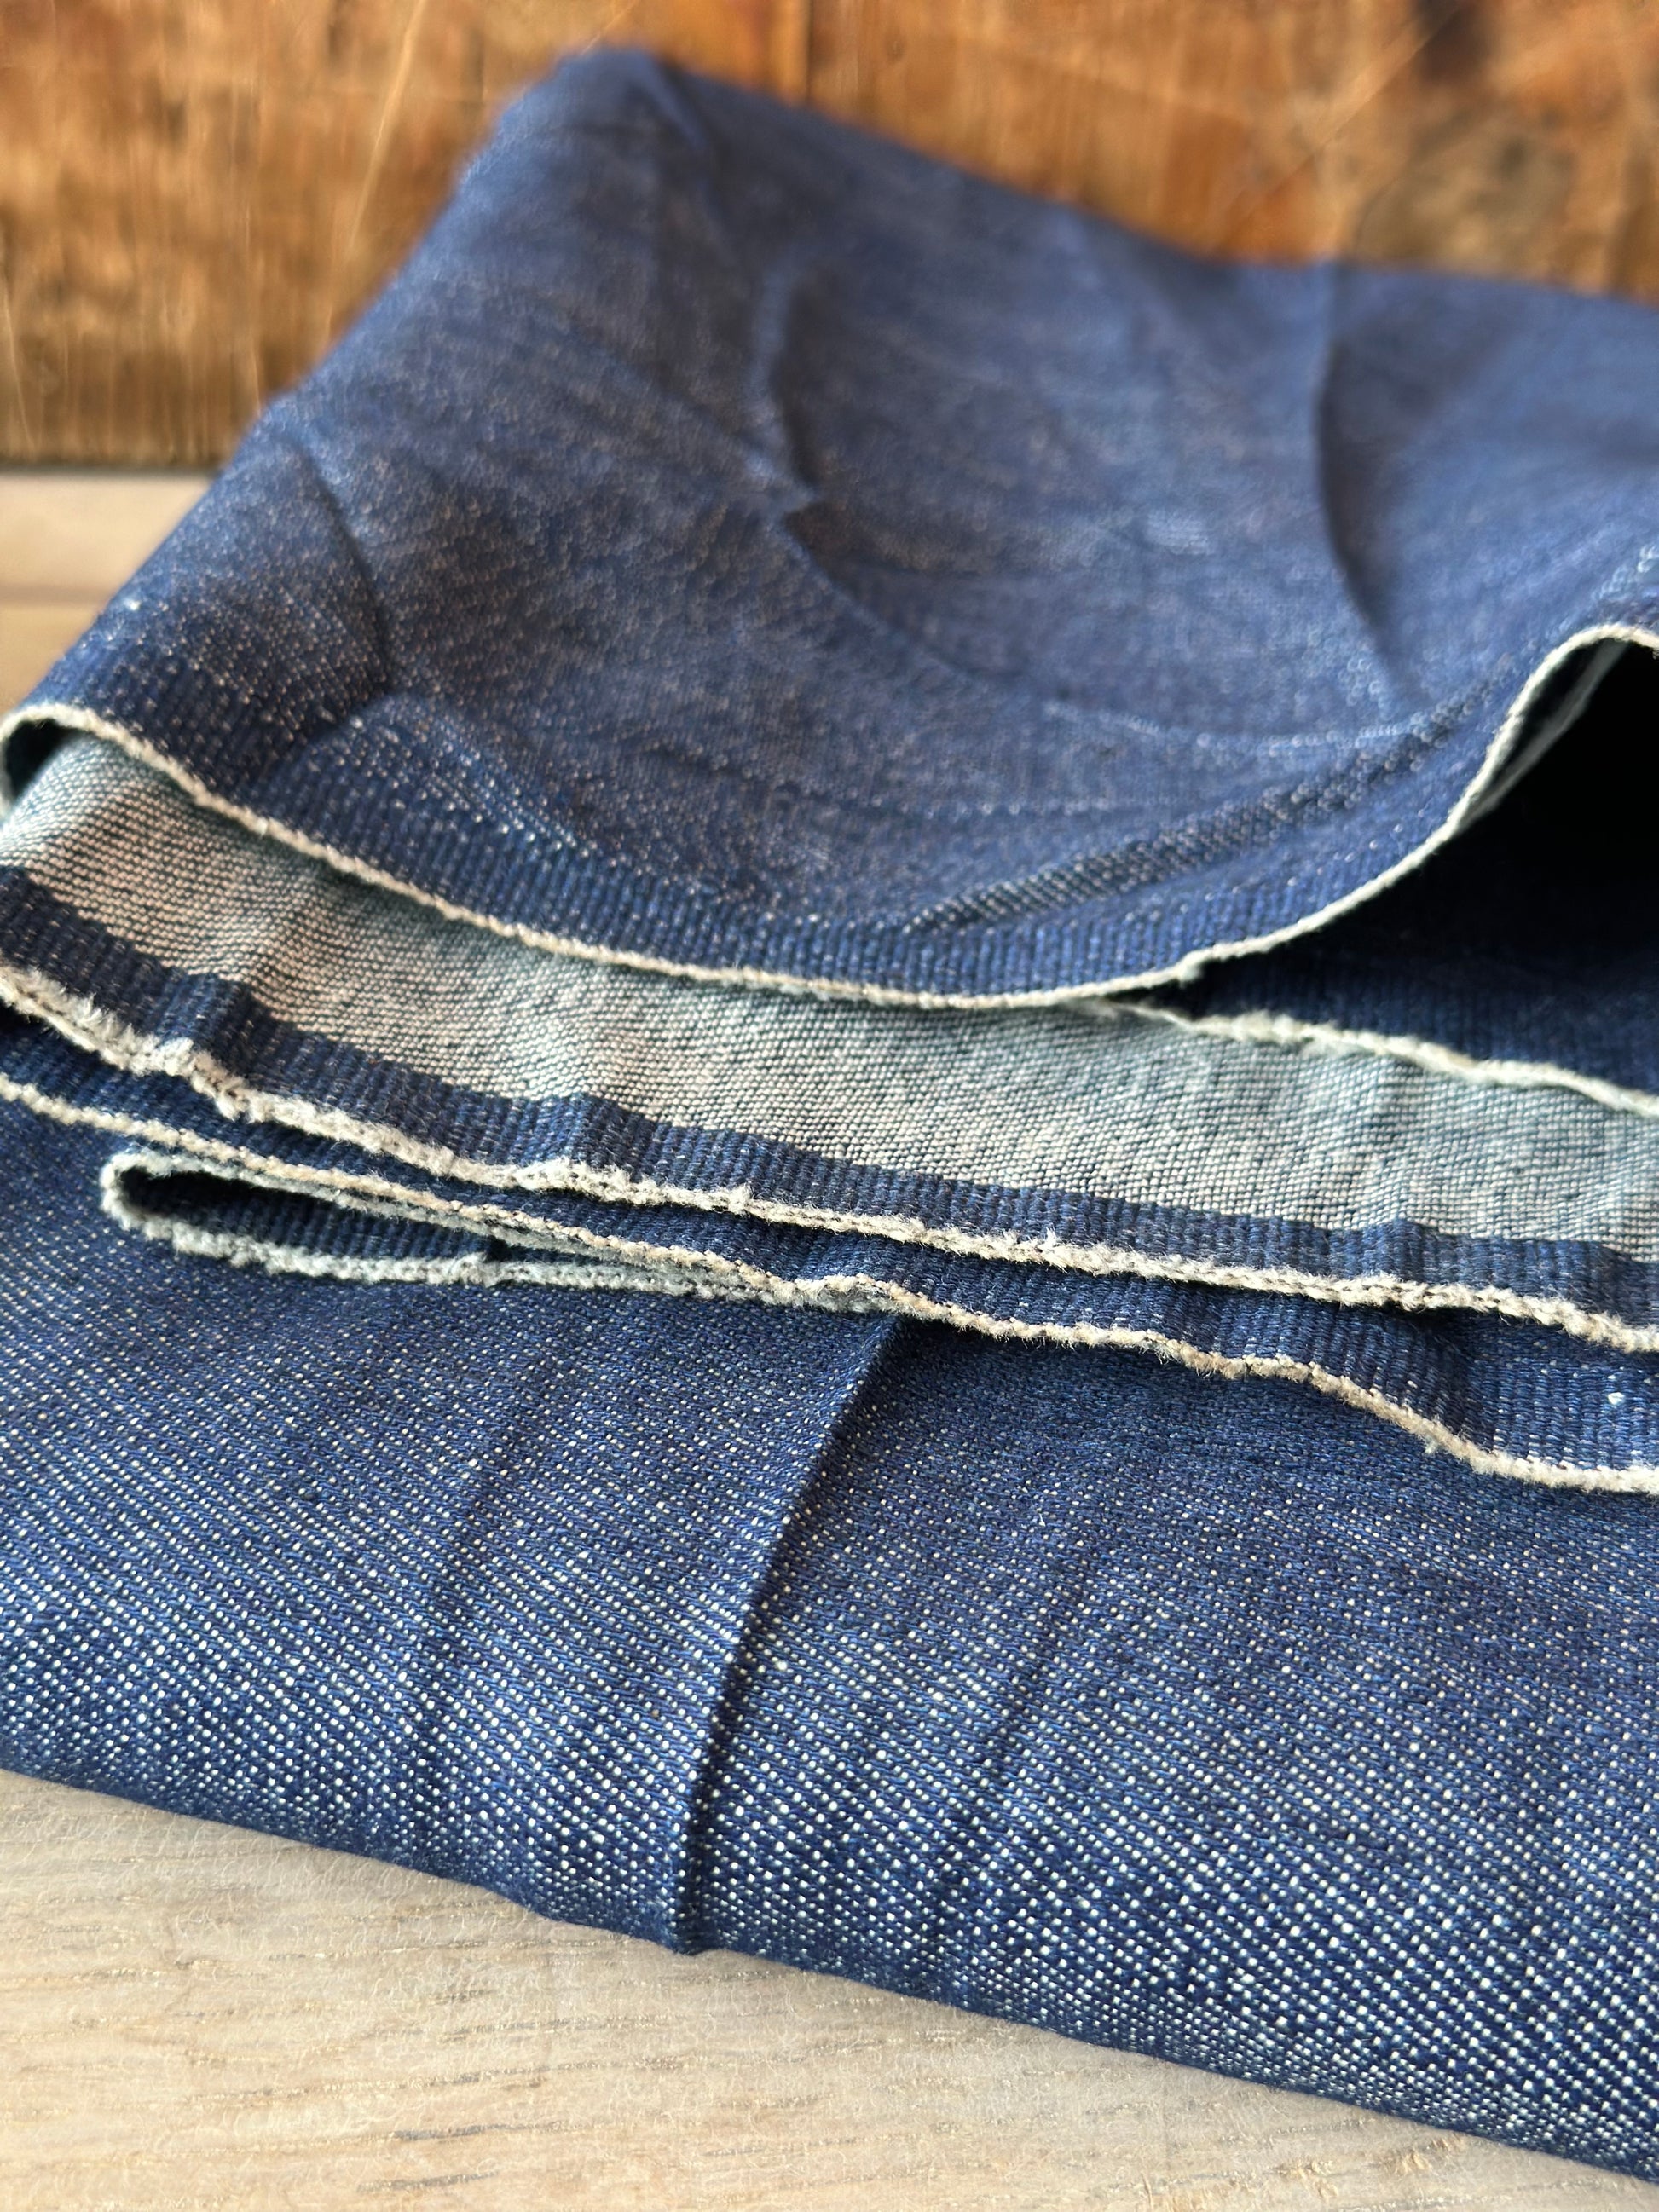 Japanese denim – Isee fabric